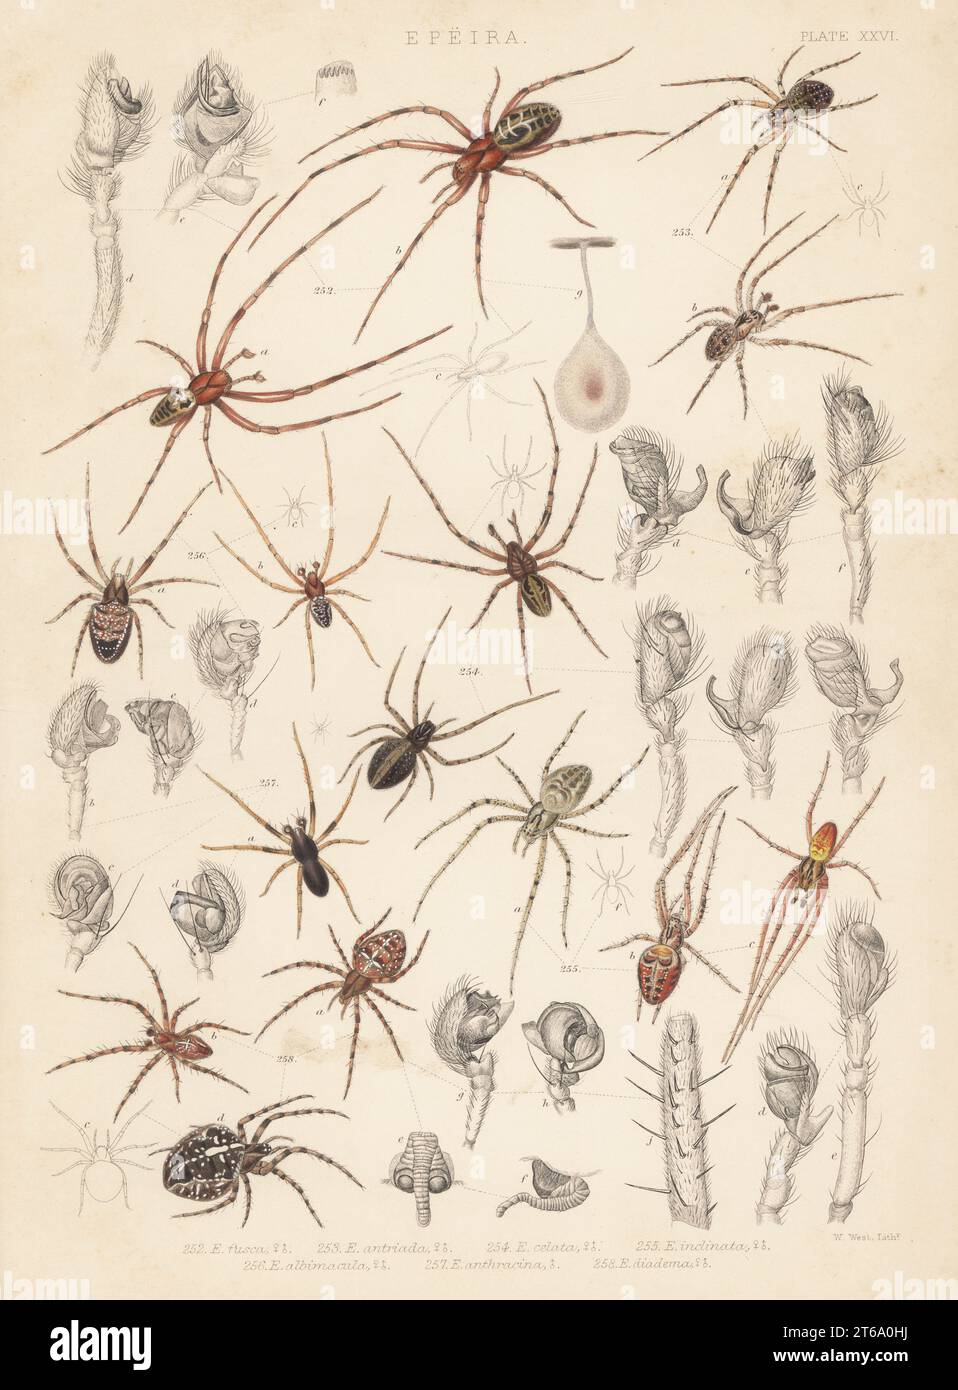 European cave spider, Meta menardi (Epeira fusca) 252, Metellina merianae (E. antriada) 253, Metellina merianae var. celata (E. celata) 254, Metellina segmentata (E. inclinata) 255, orbweaver, Zilla diodia (E. albimacula) 256, Hypsosinga pygmaea (E. anthracina) 257, and garden or diadem spider, Araneus diadematus (E. diadema) 258. Handcoloured lithograph by W. West from John Blackwalls A History of the Spiders of Great Britain and Ireland, Ray Society, London, 1861. Stock Photo